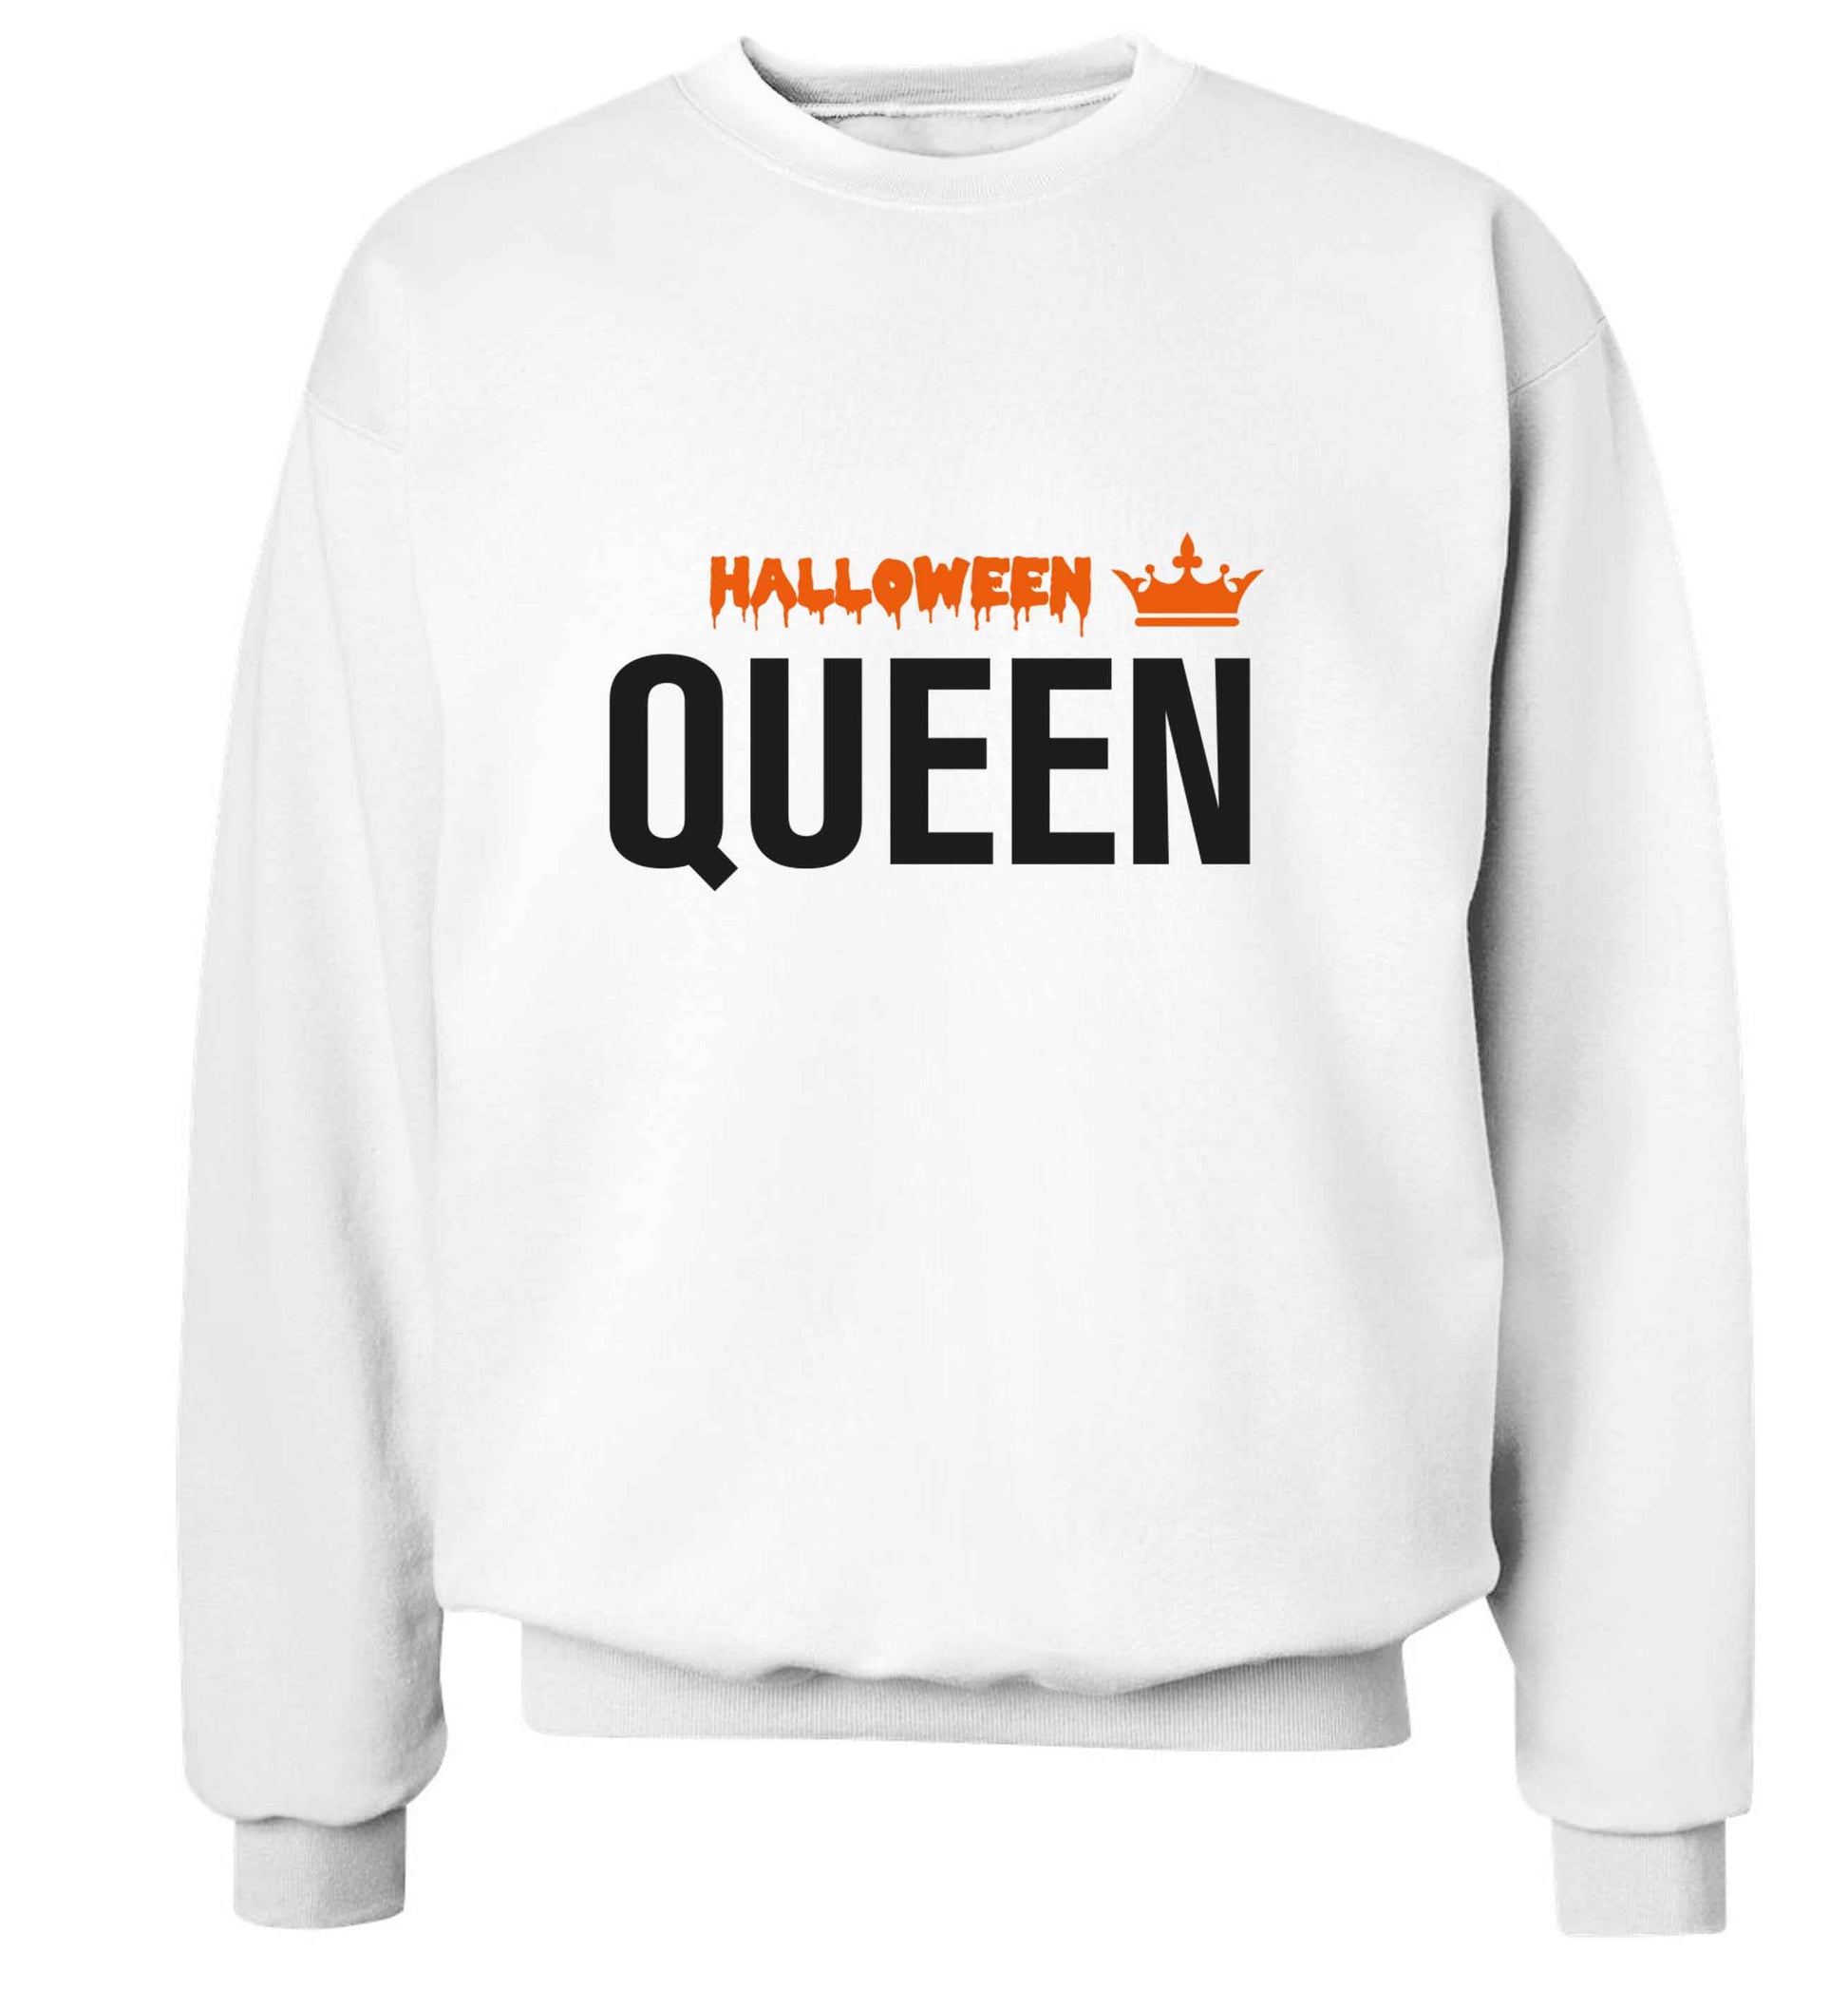 Halloween queen adult's unisex white sweater 2XL